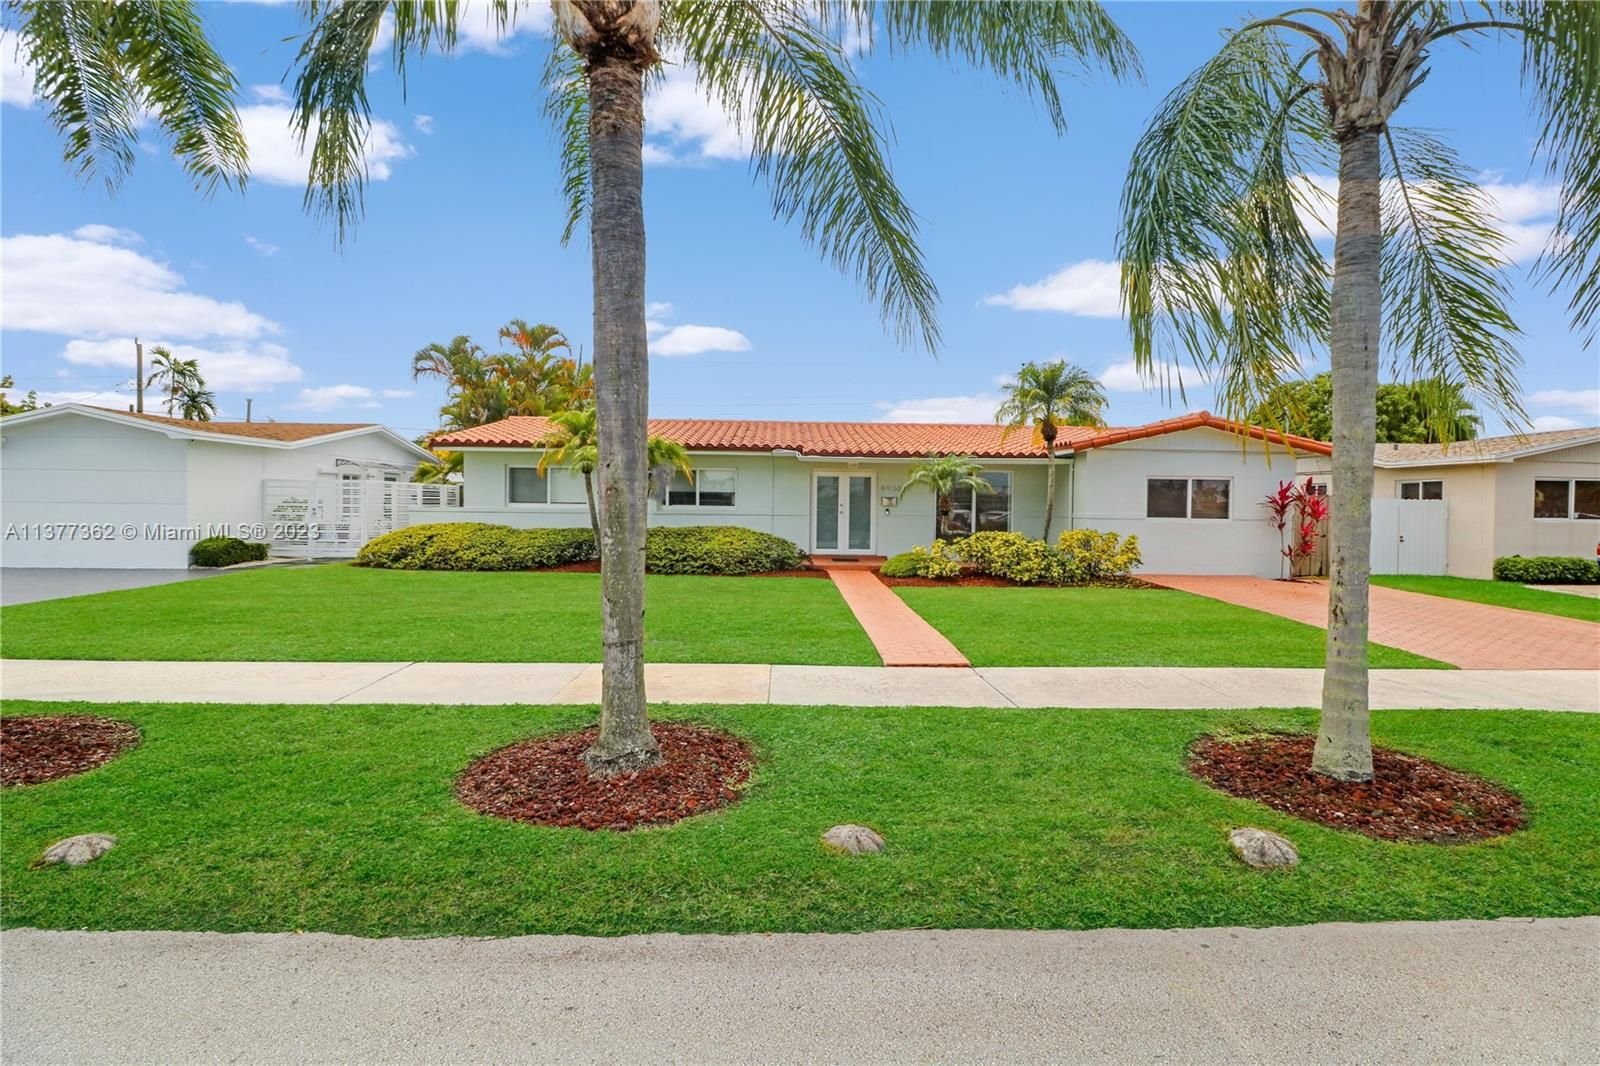 Real estate property located at 8930 50th Ter, Miami-Dade County, Miami, FL